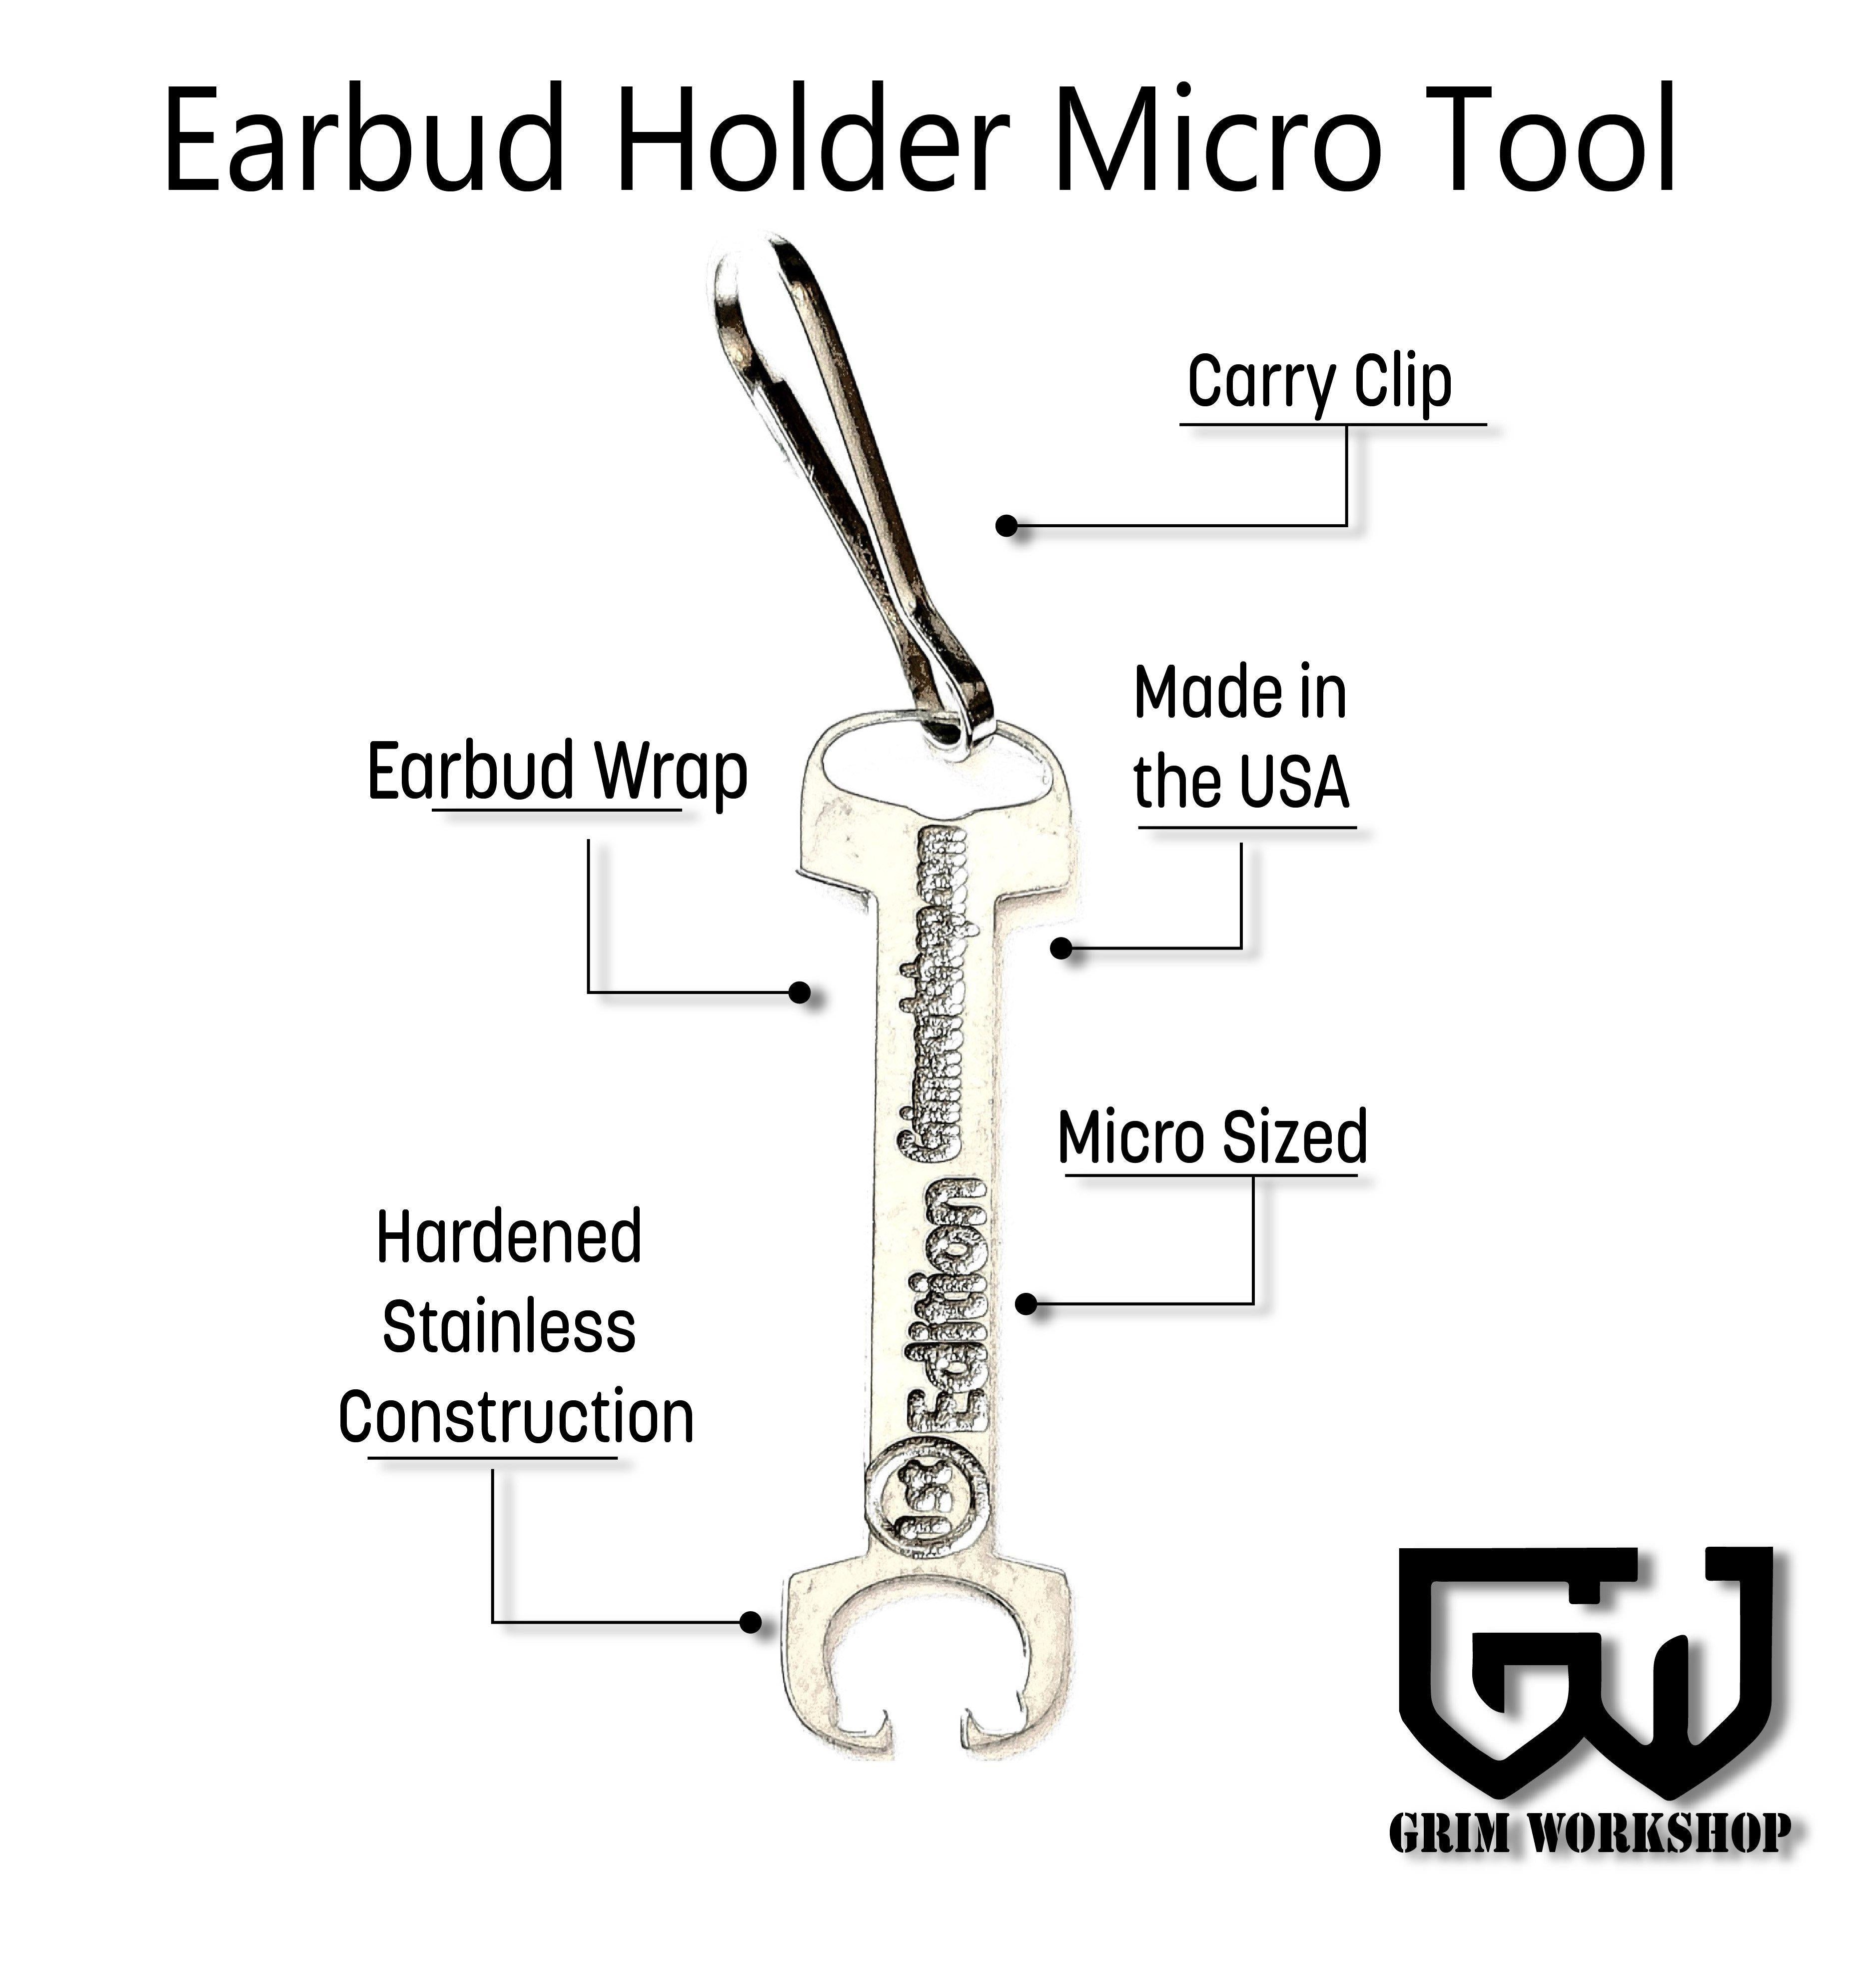 Earbud Holder Micro Tool-Grimworkshop-bugoutbag-bushcraft-edc-gear-edctool-everydaycarry-survivalcard-survivalkit-wilderness-prepping-toolkit